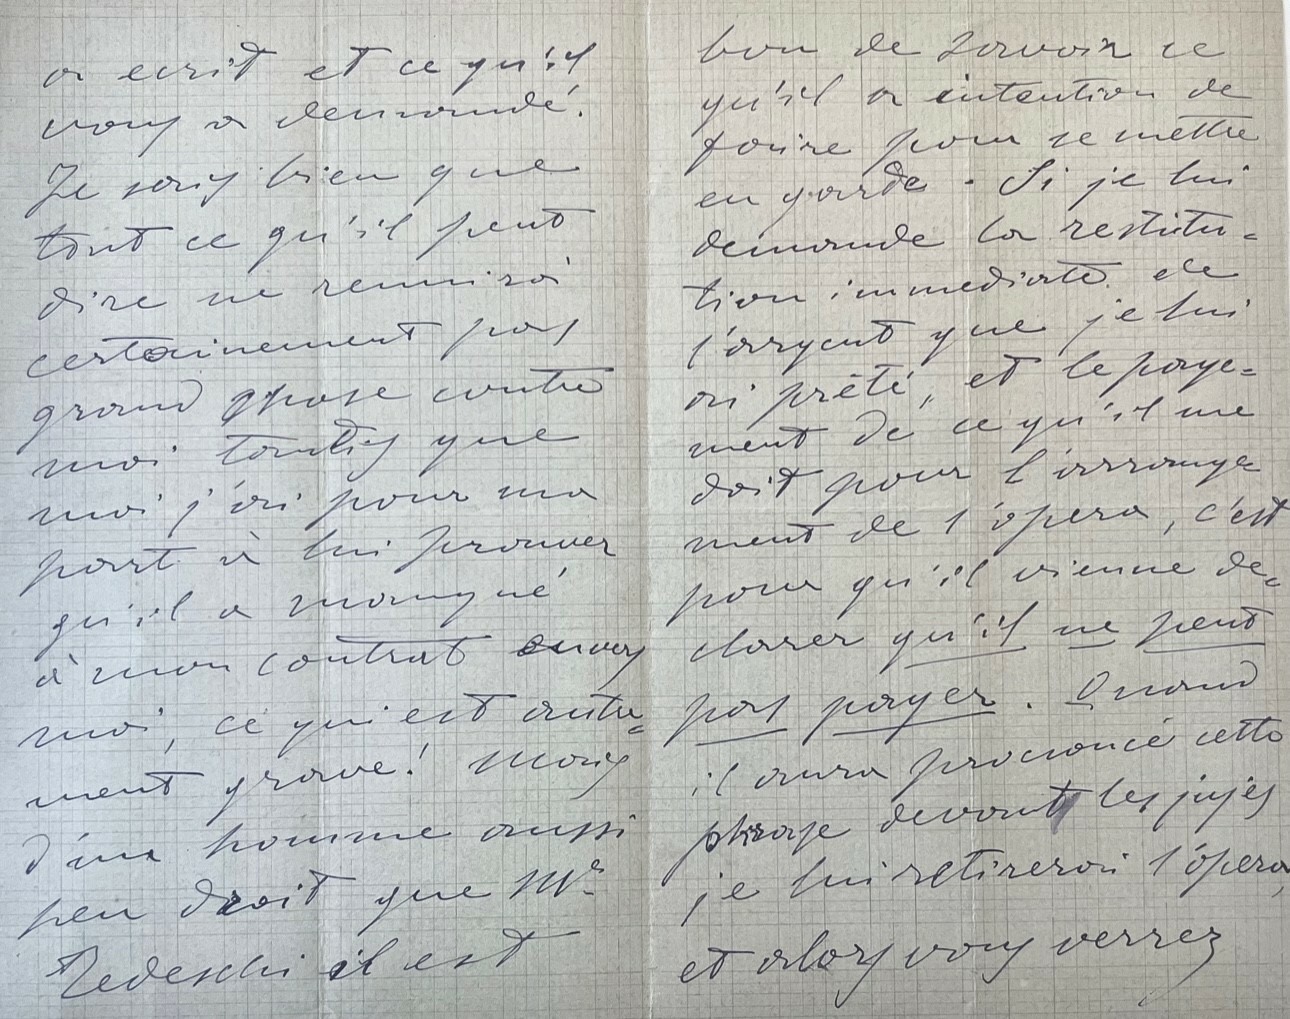 Leoncavallo letter